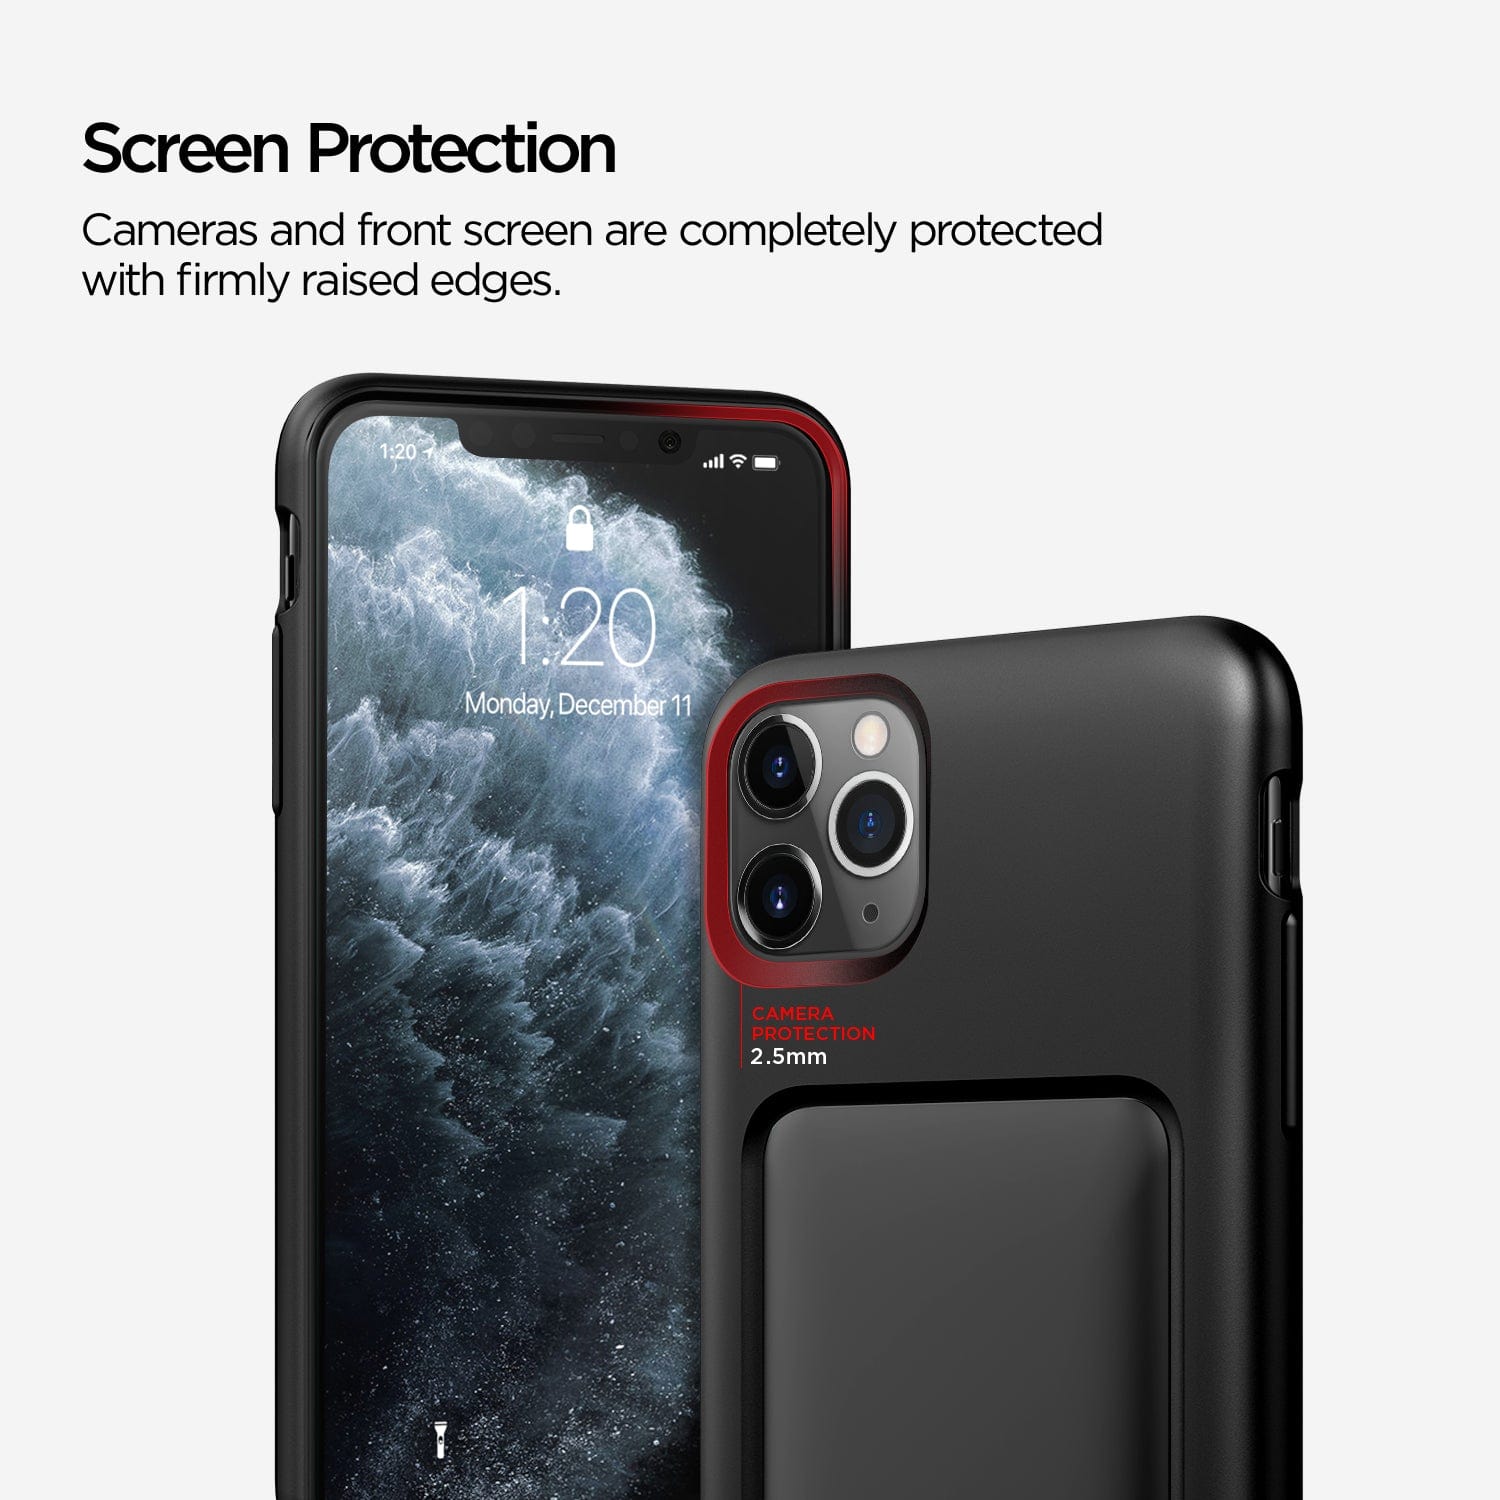 iPhone 11 Pro Max Damda High Pro Shield Matt Black Case By VRS Design